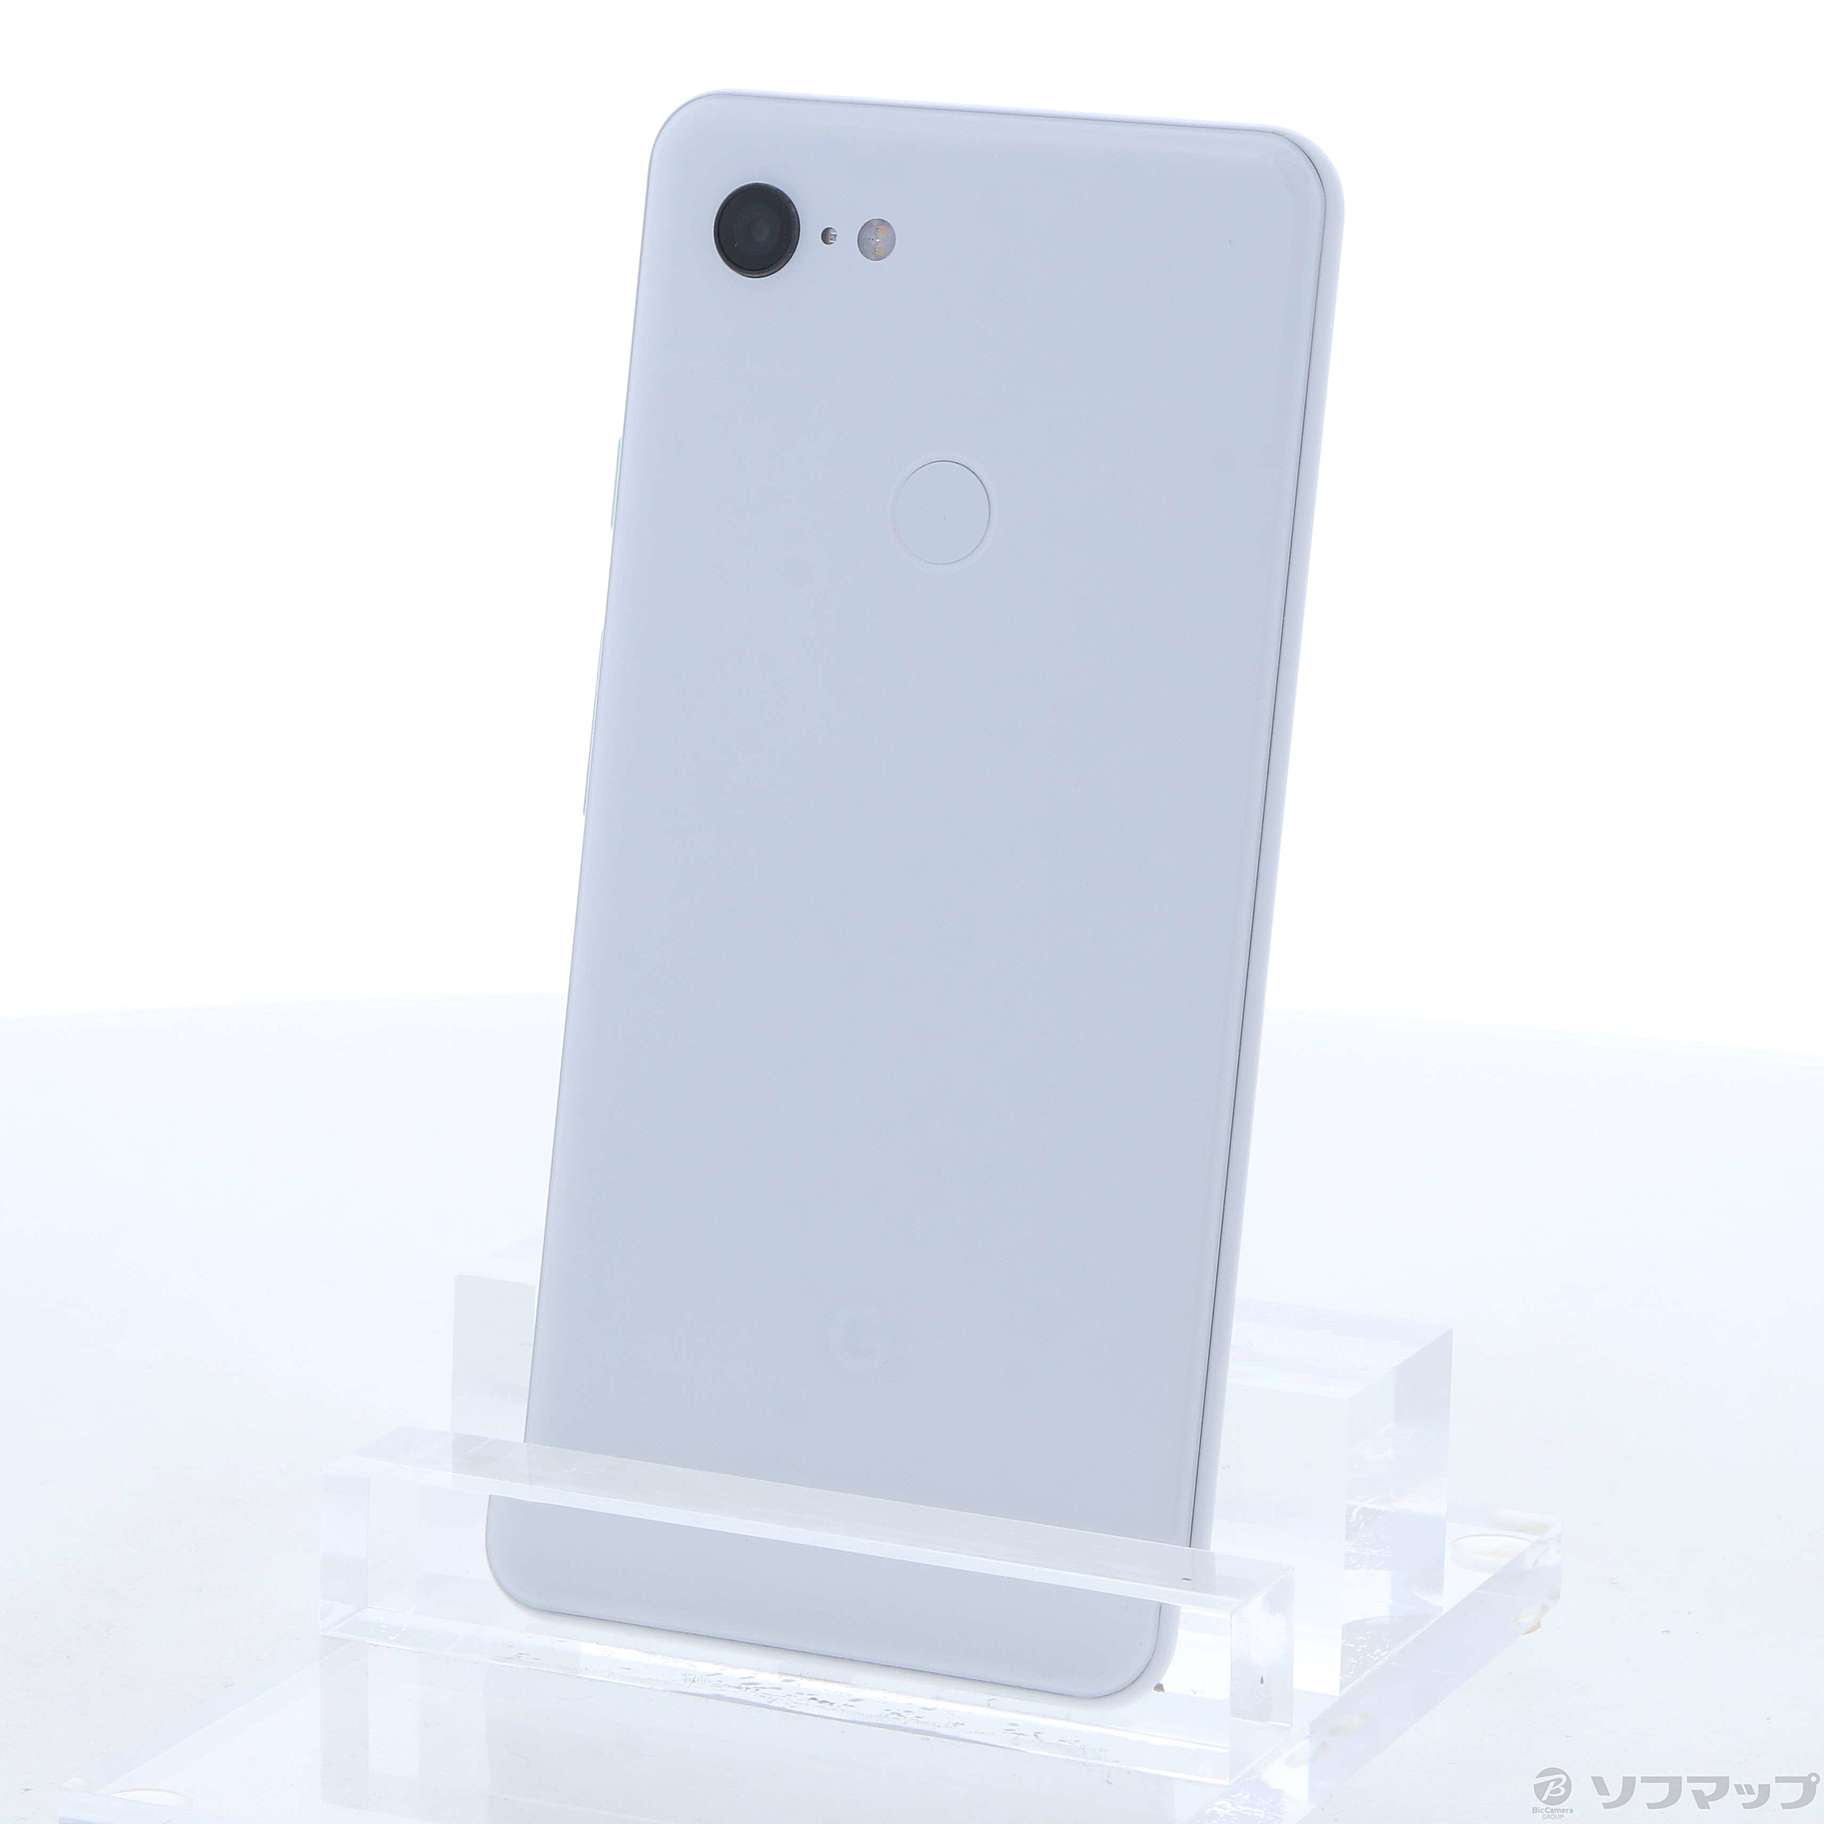 Google Pixel 3 XL 128GB Clealy White 一括 - スマートフォン本体